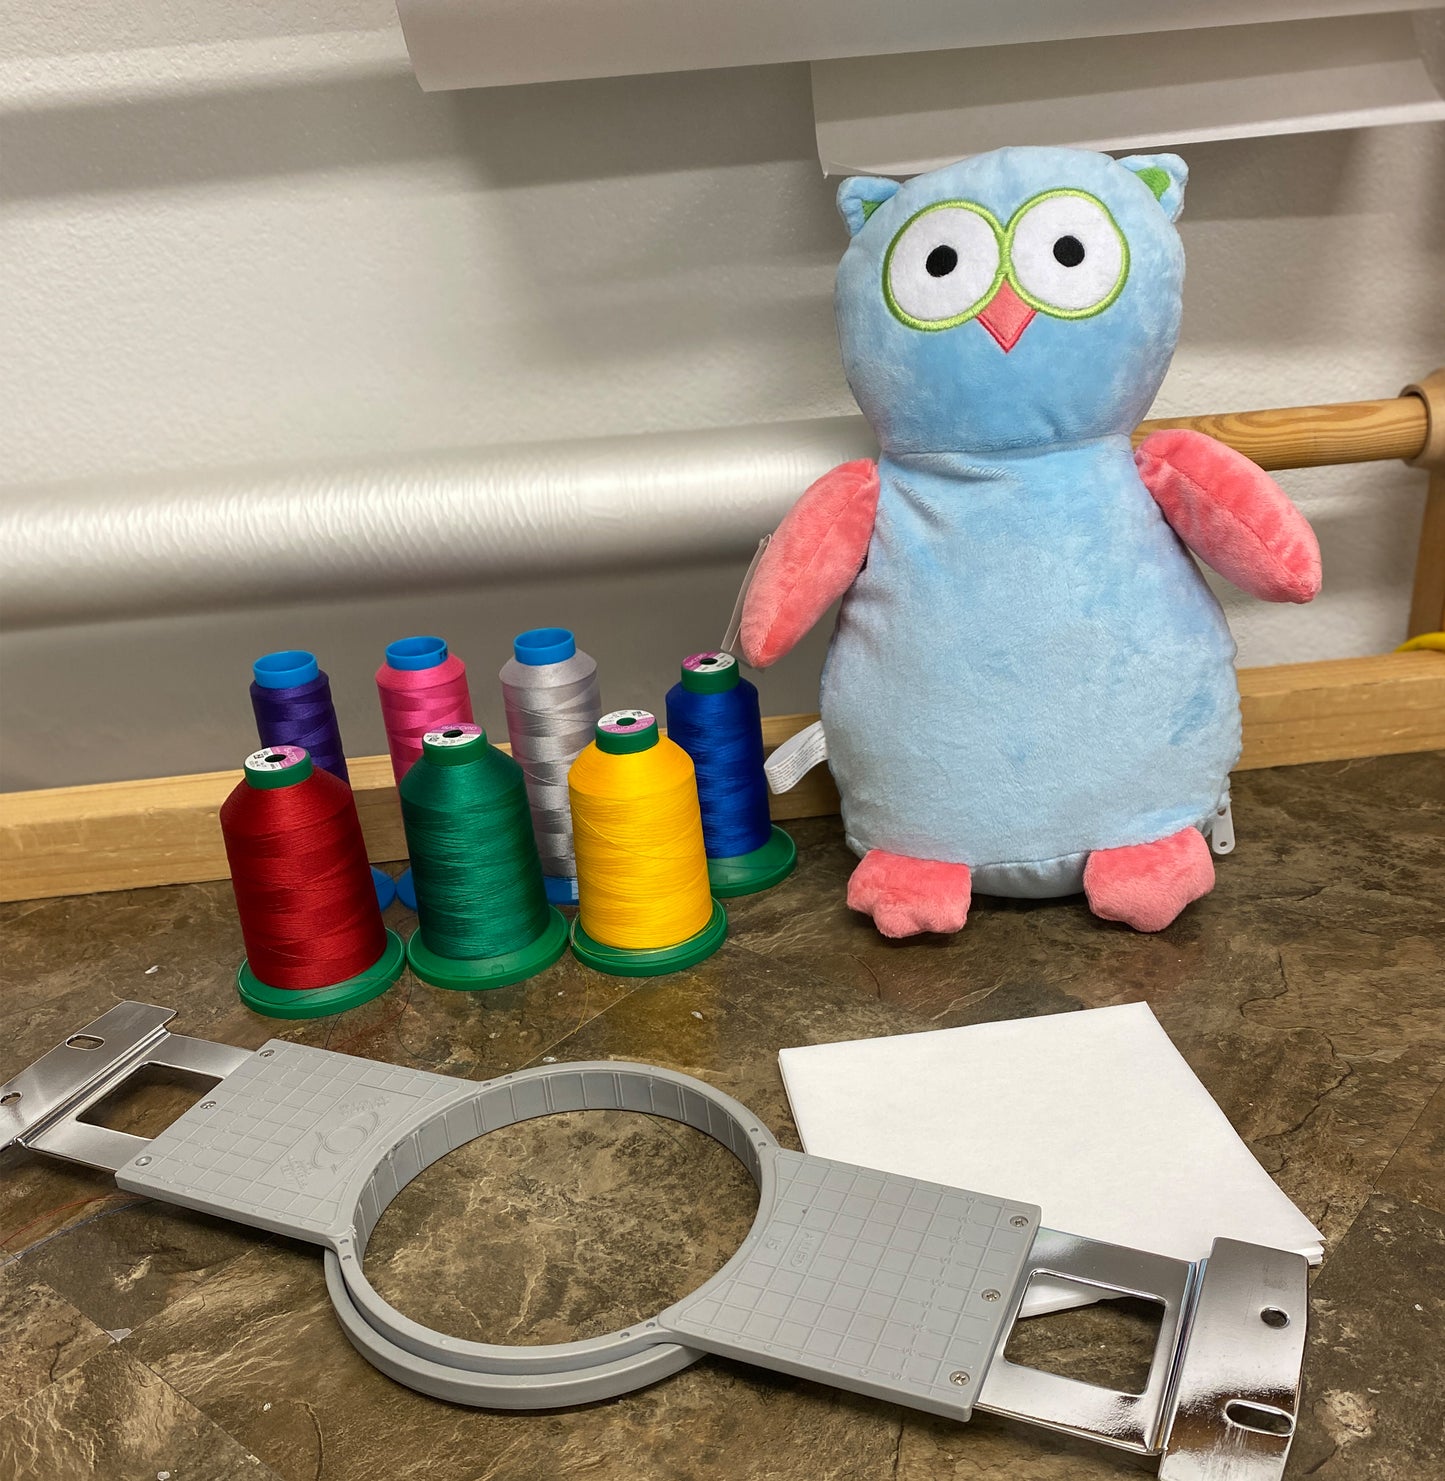 Personalized Stuffed Blue Owl